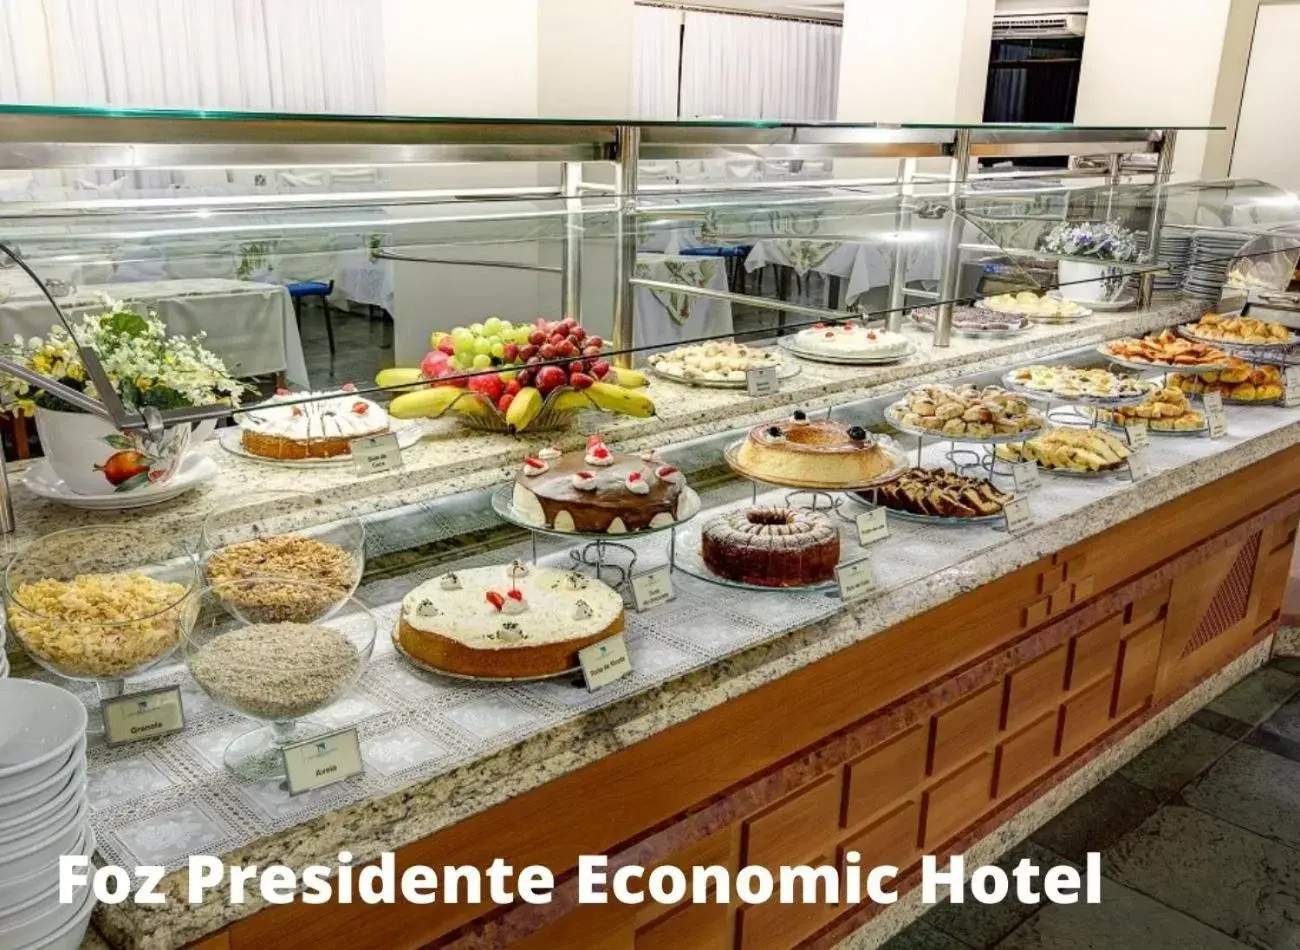 Continental breakfast in Foz Presidente Economic Hotel